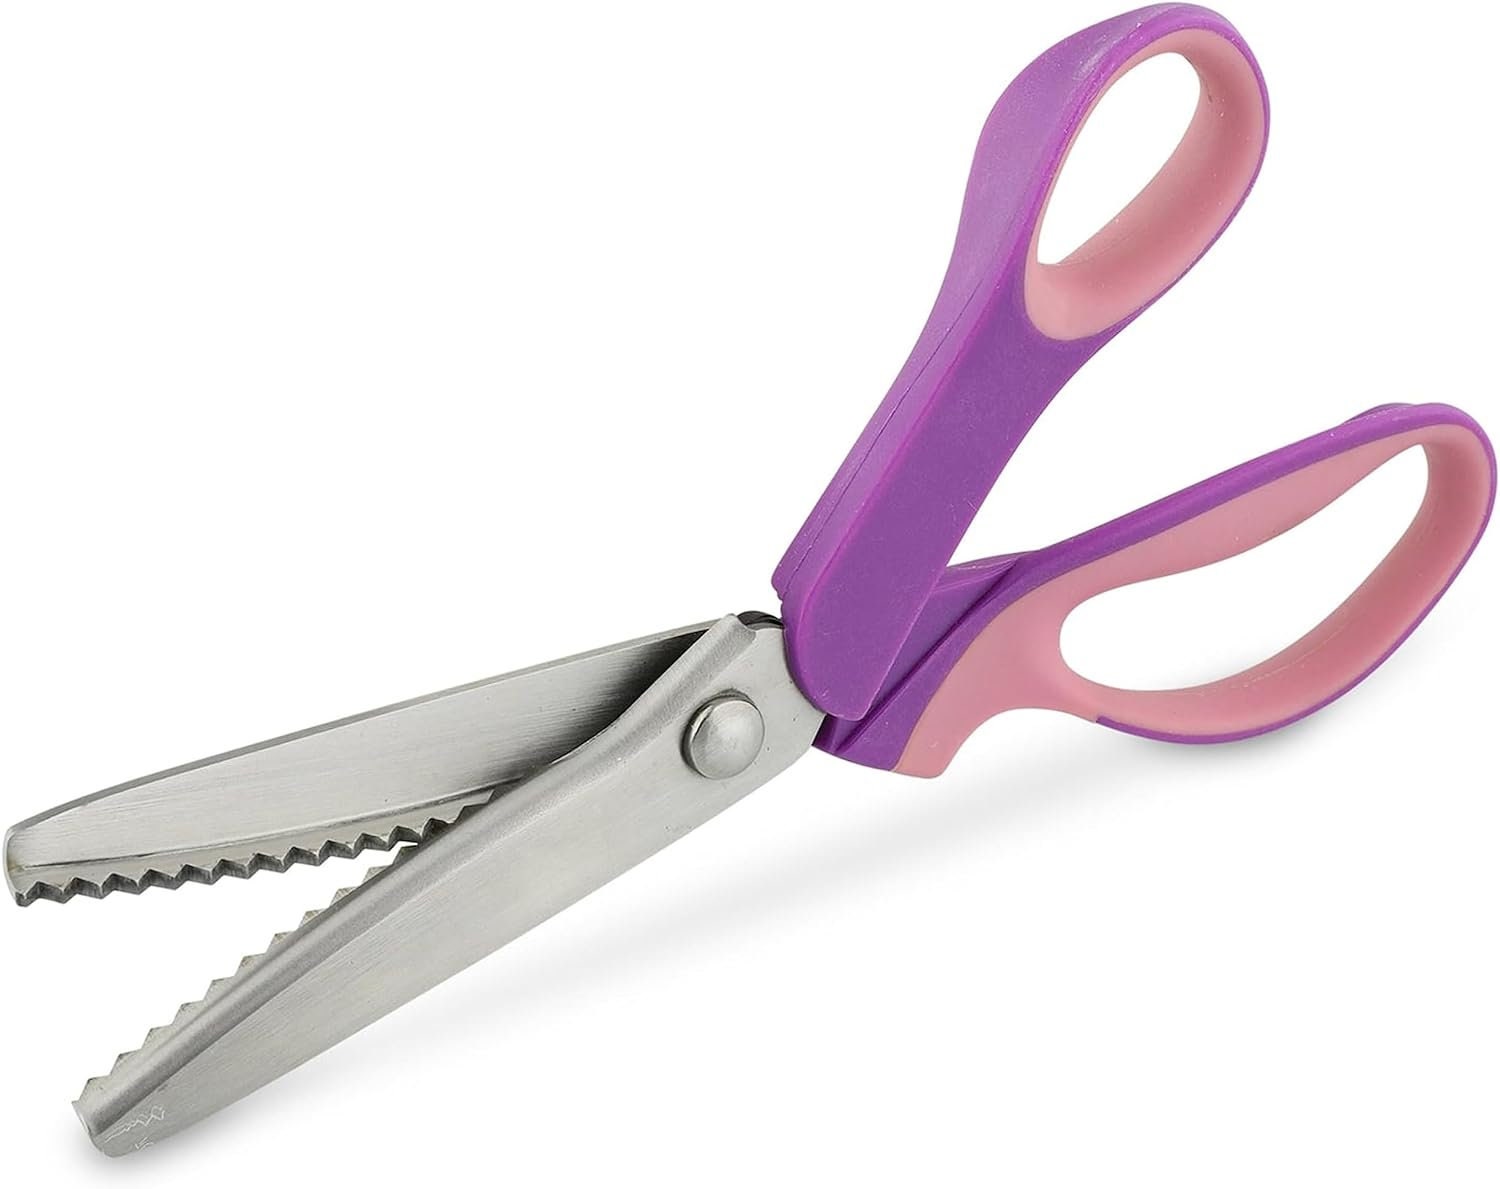 Pinking Crafting Scissors Heavy Duty – 9.2 Inch Purple Pink Craft Scissors  Decorative Edge Scissors with Comfort Grips Handles Zig Zags Cute